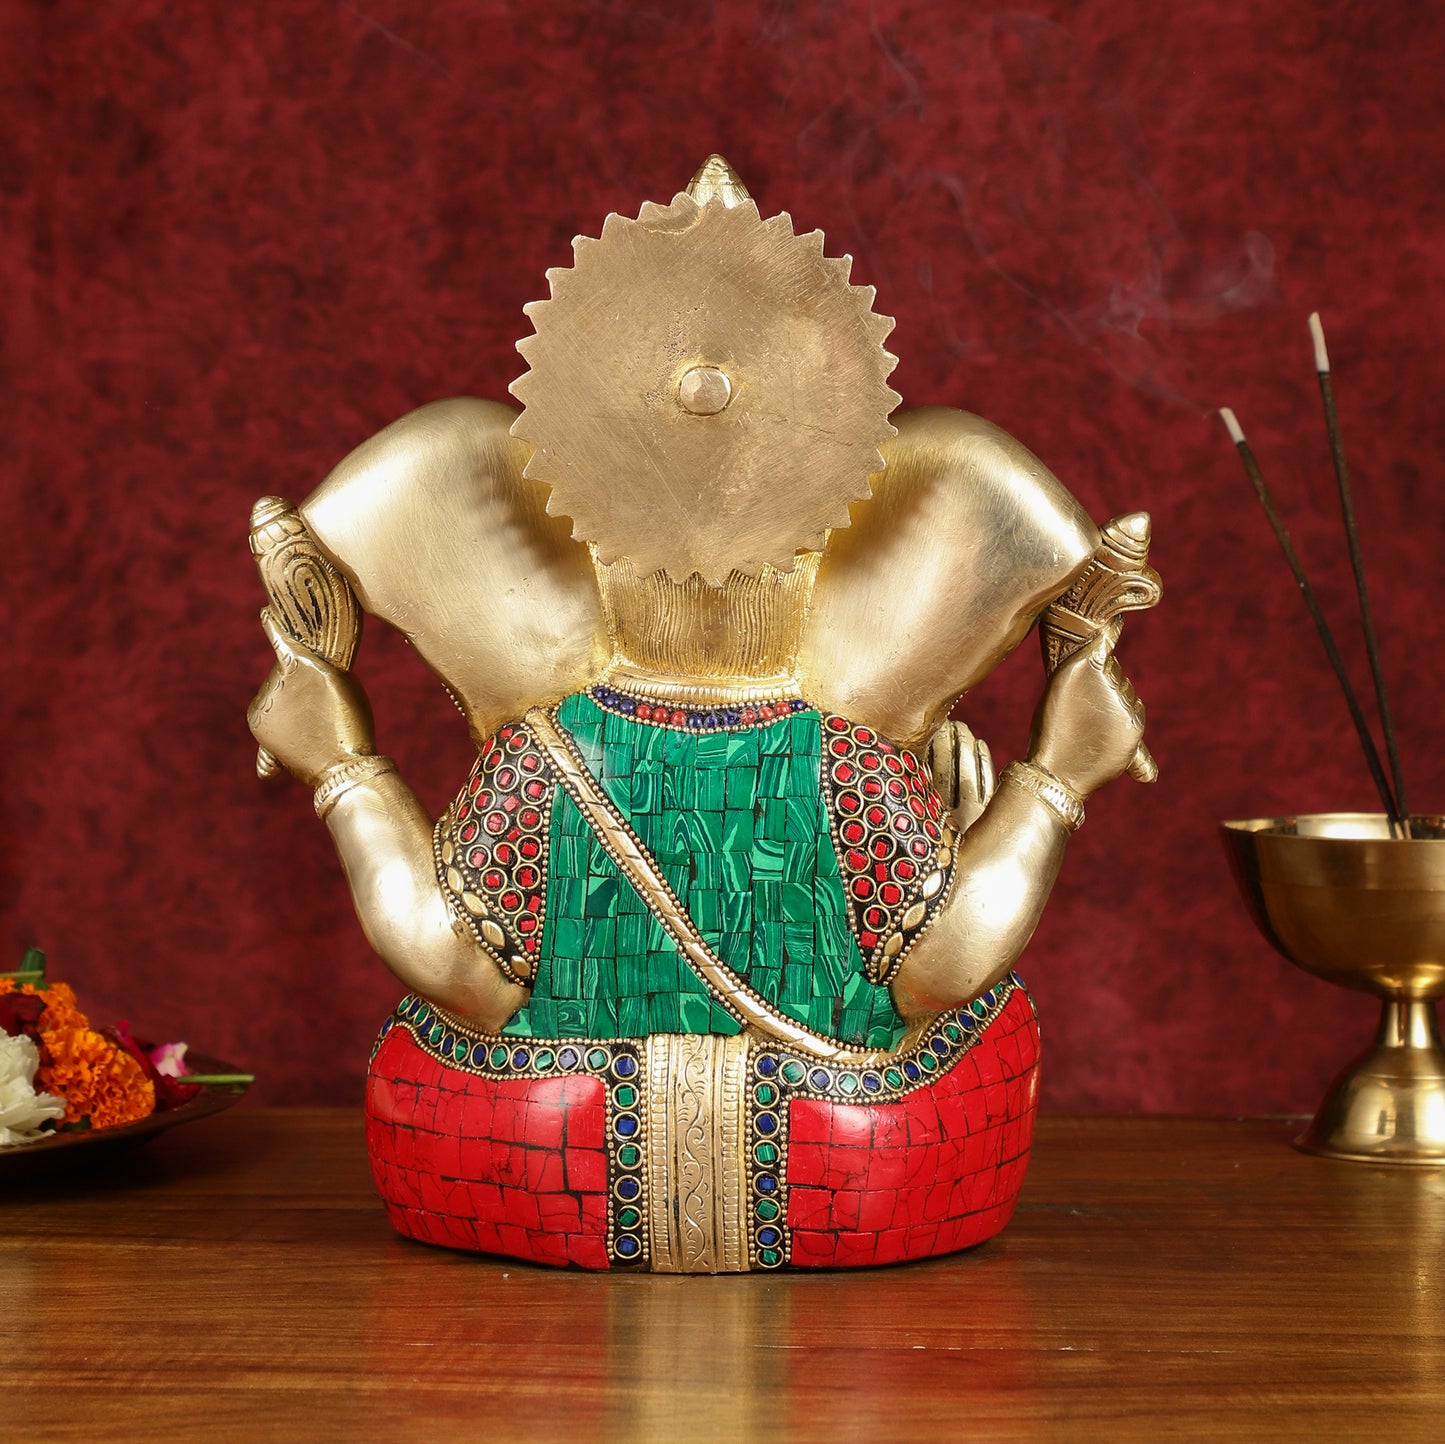 Divine Brass Lord Ganesha Statue with Meenakari Stonework and Big Ears - 10"